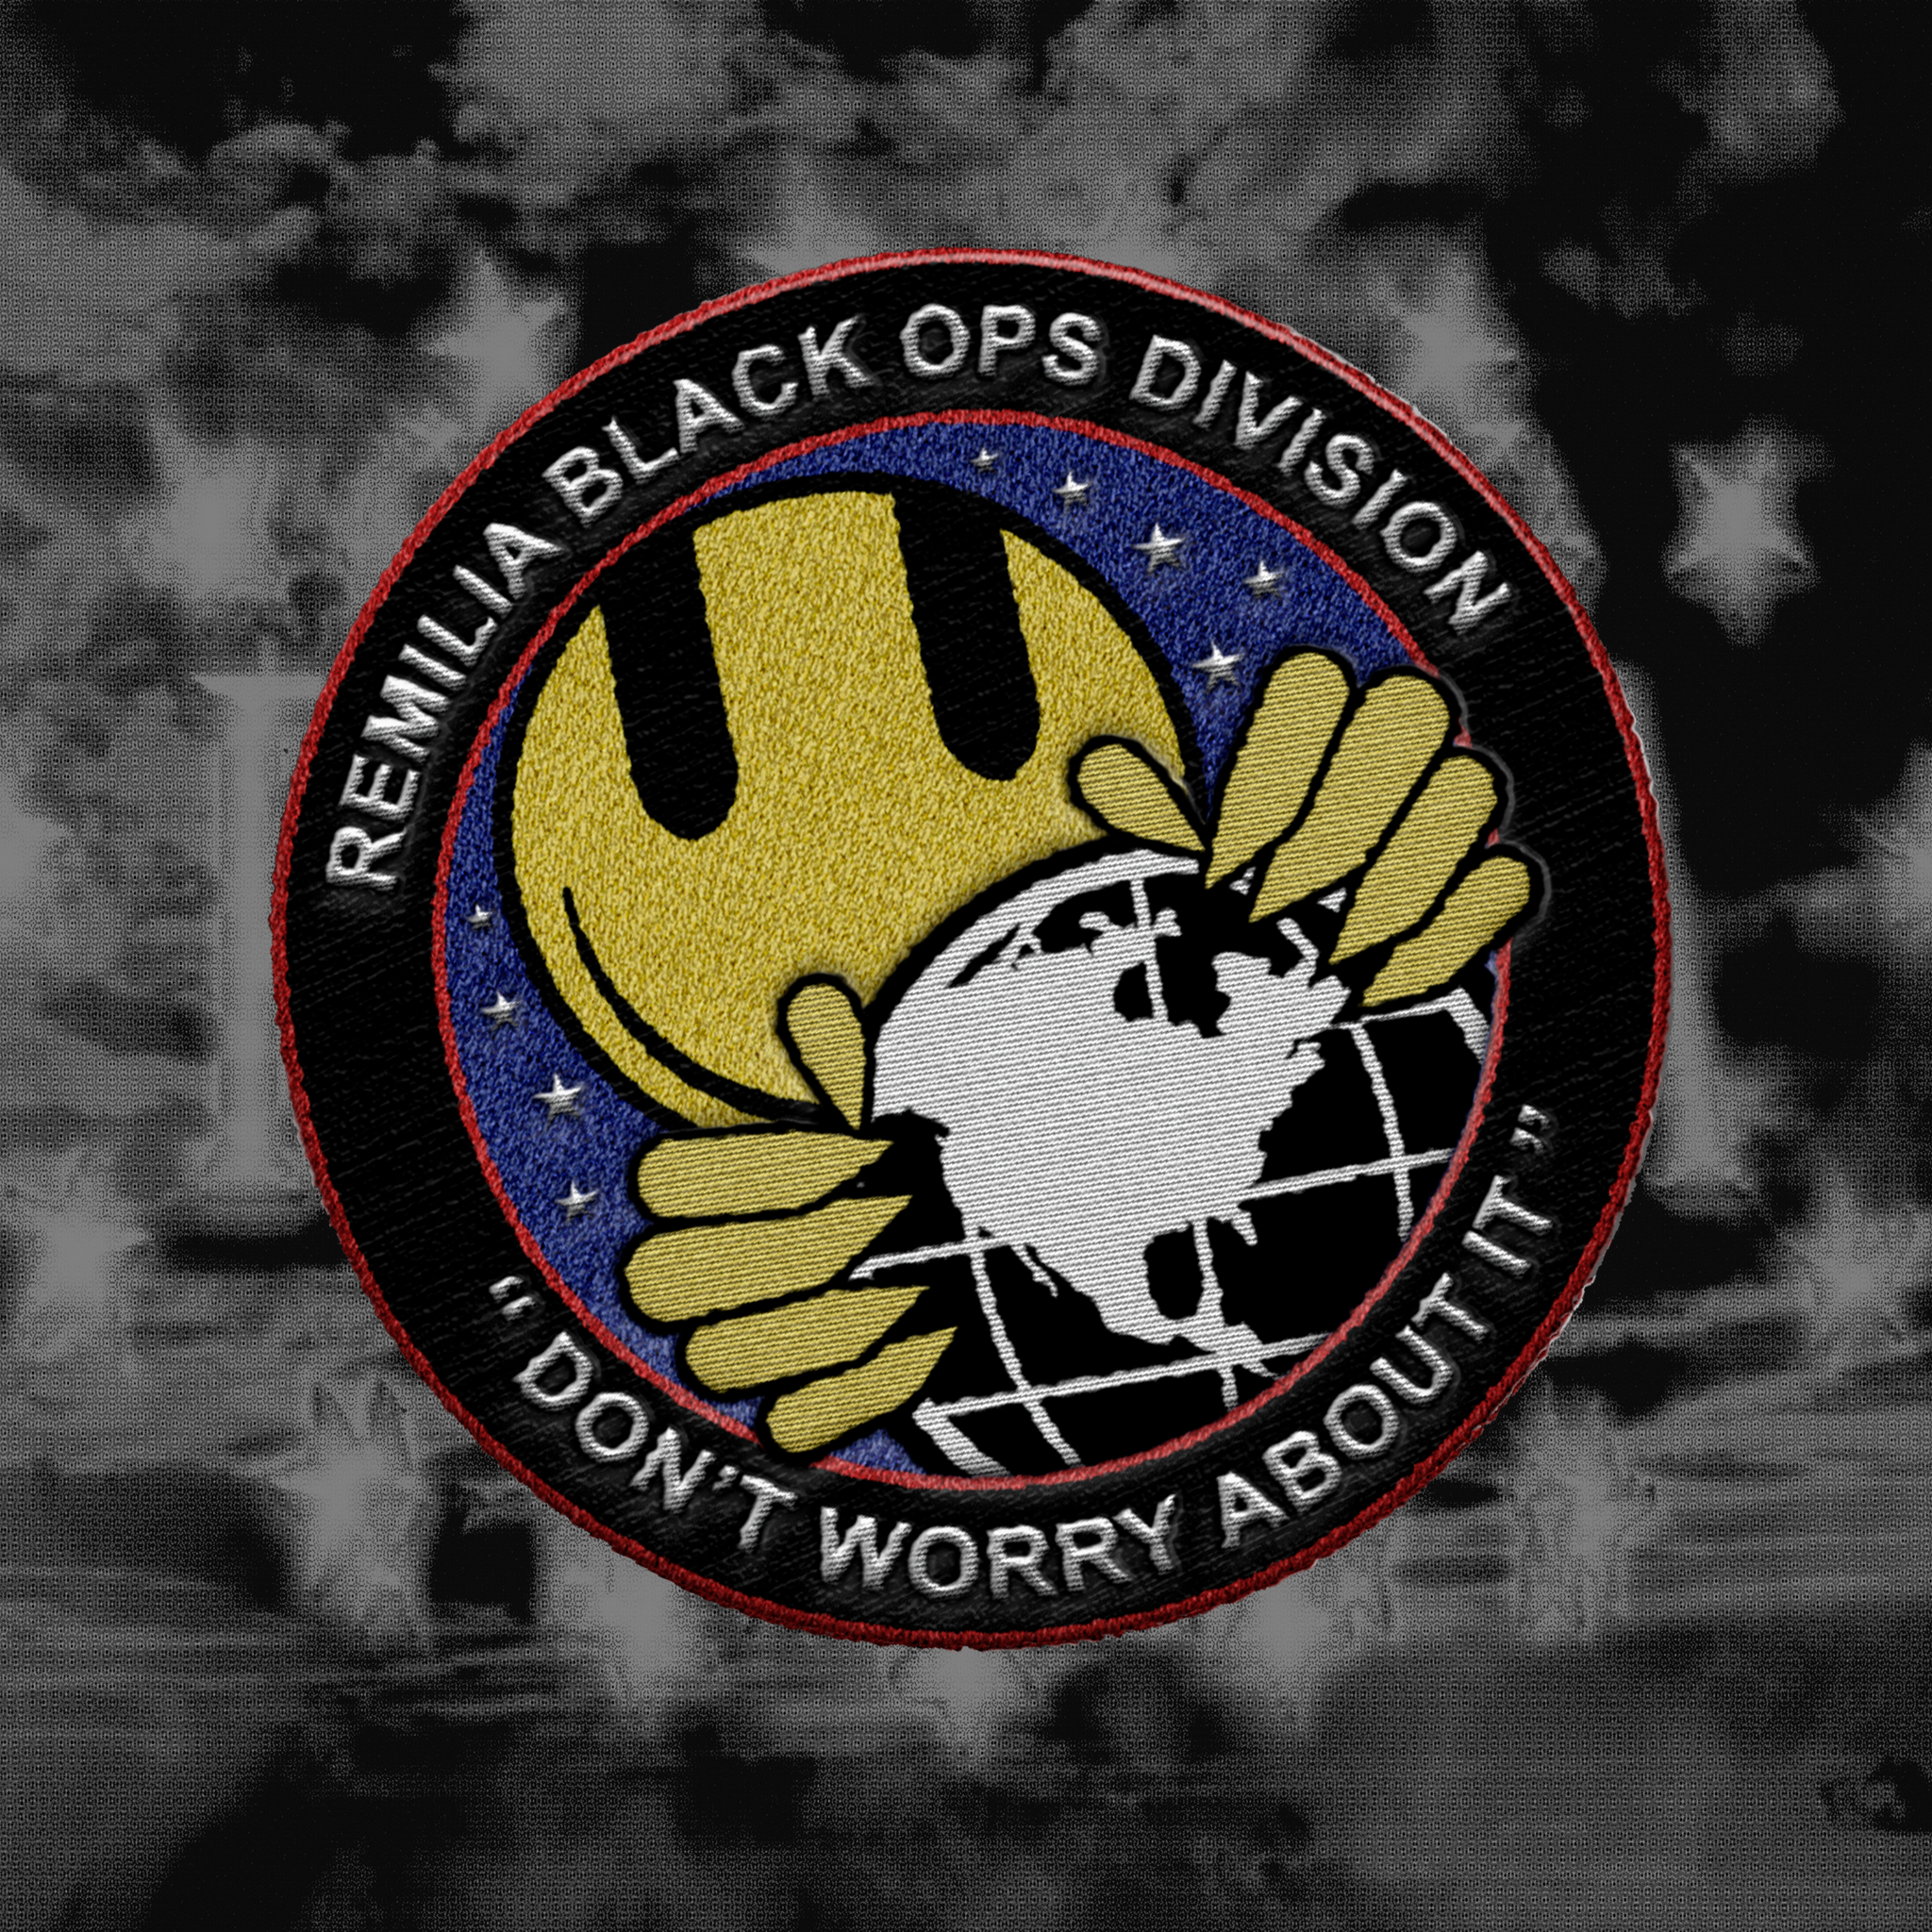 Remilia Black Ops Division Patch